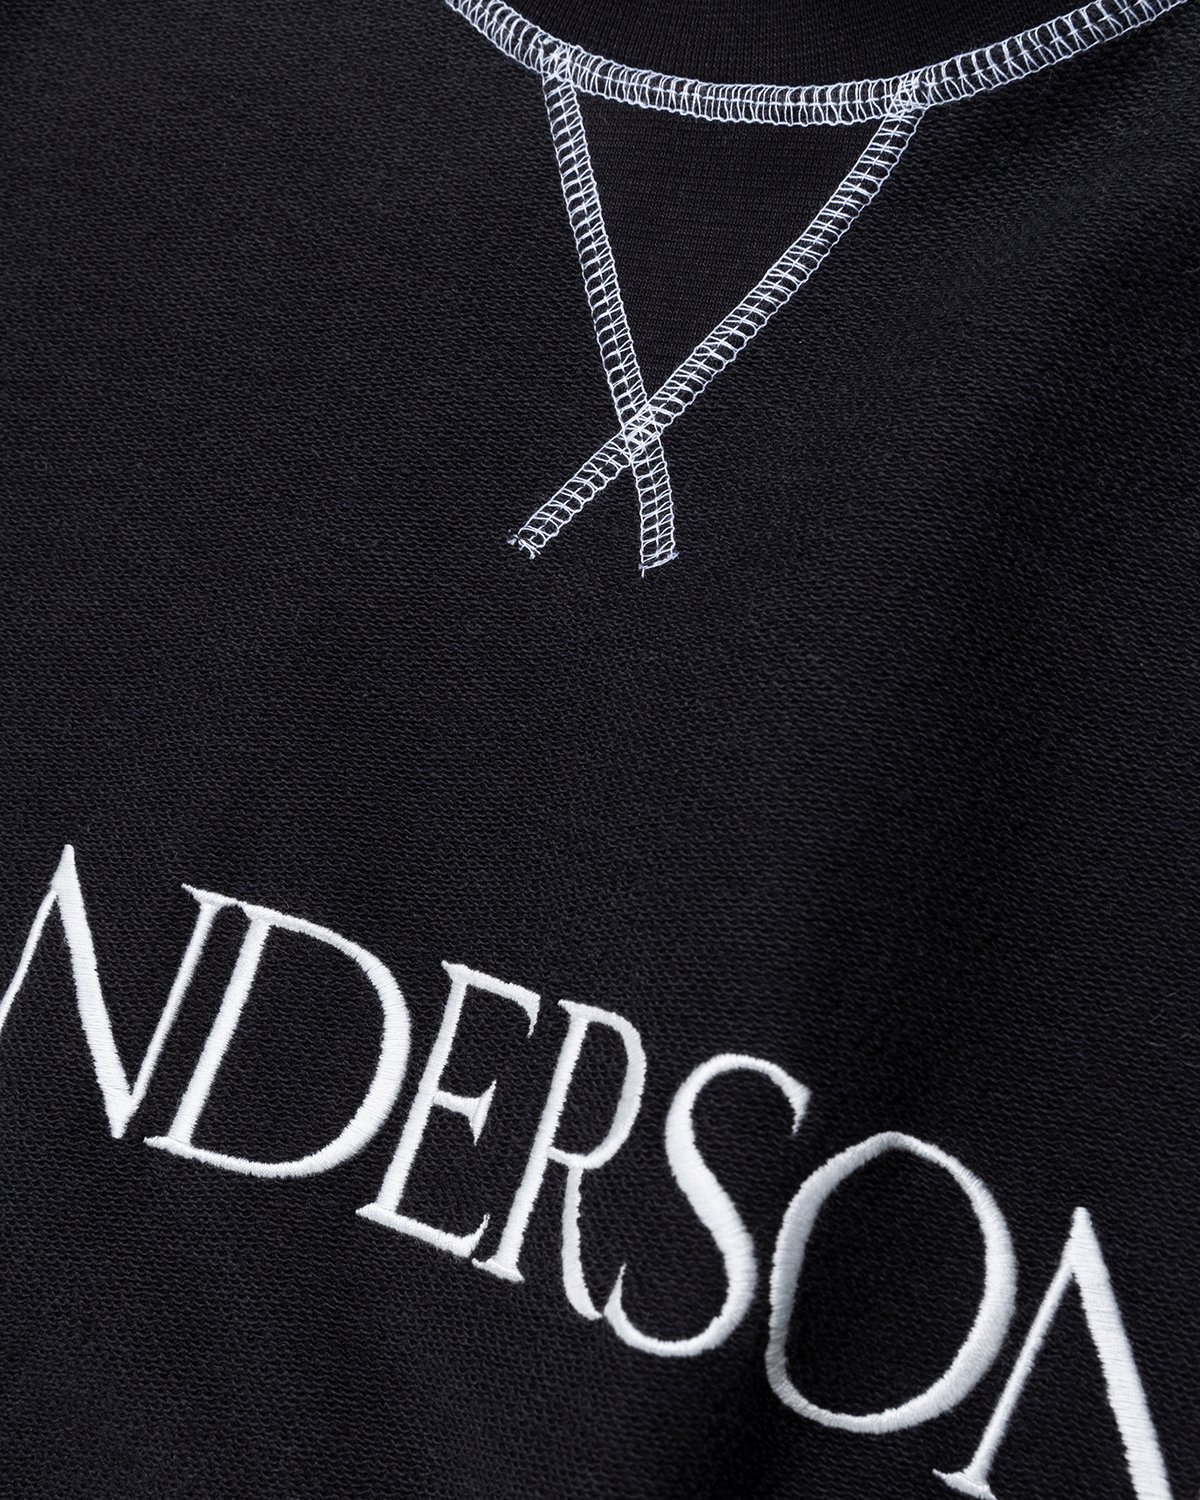 J.W. Anderson - Inside Out Contrast Sweatshirt Black - Clothing - Black - Image 4